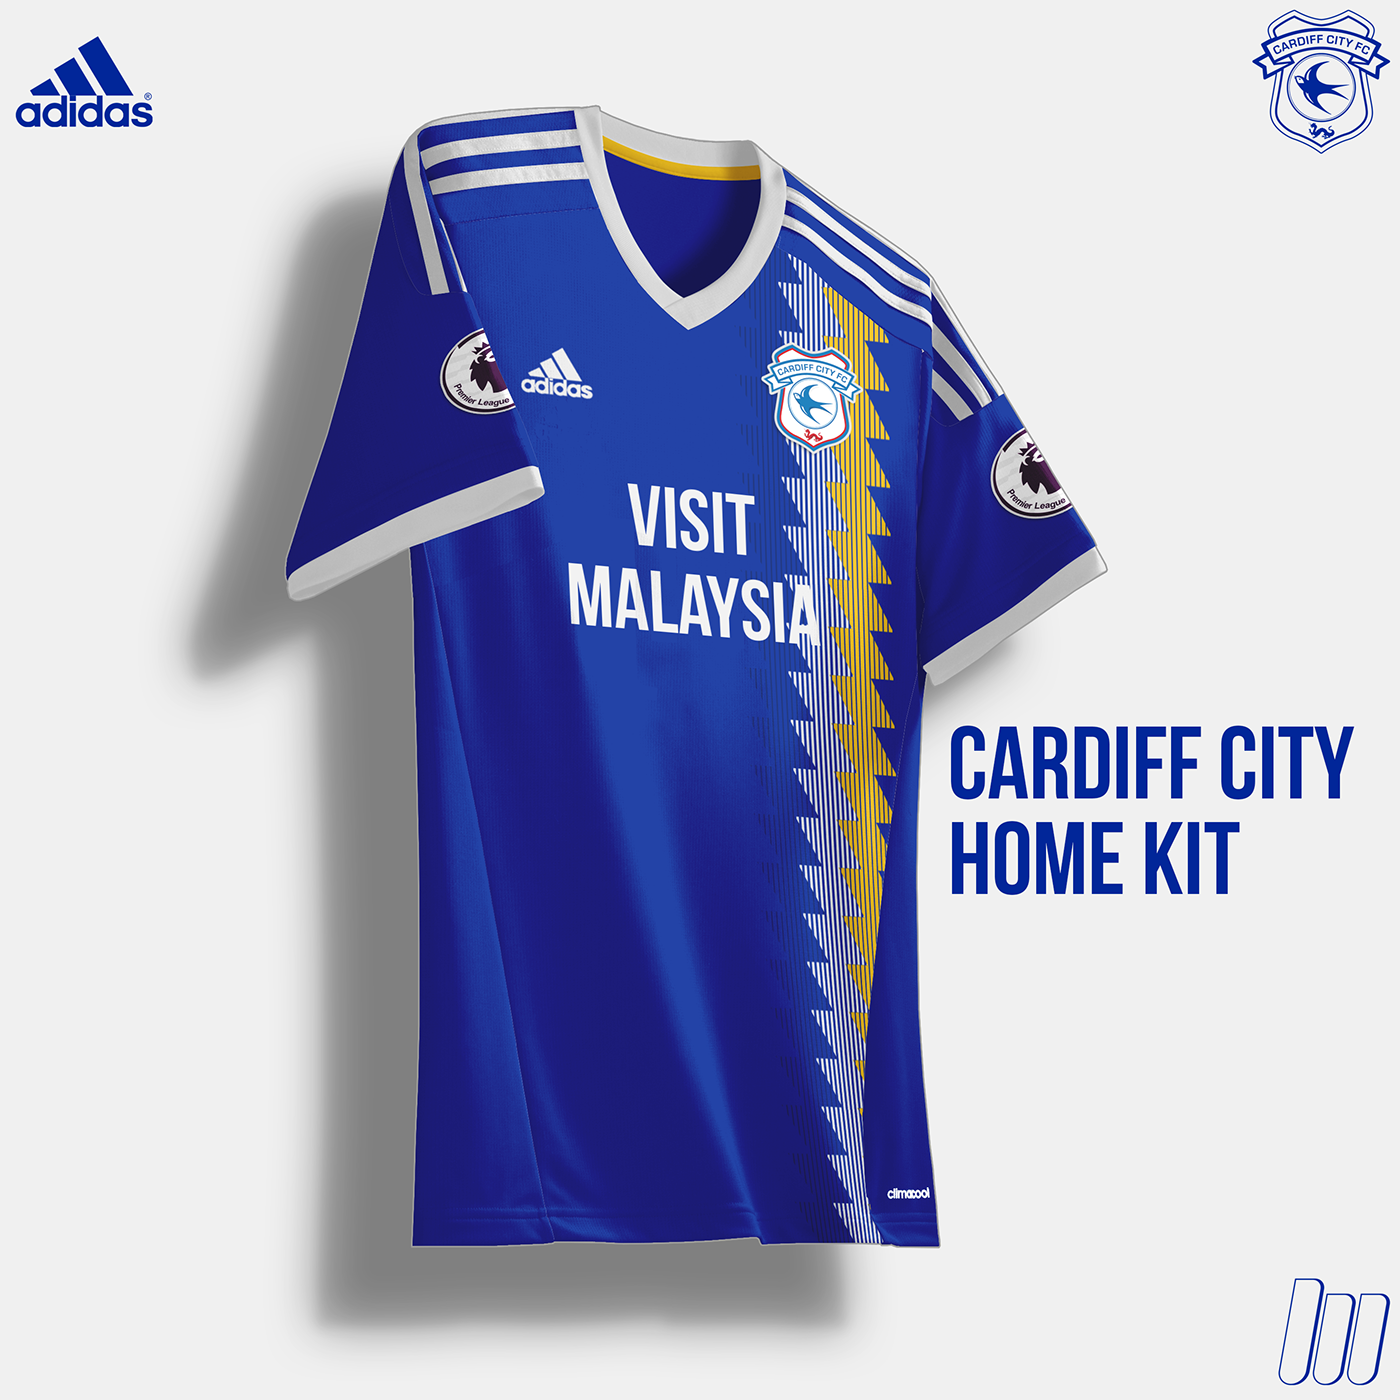 cardiff Cardiff City FC Premier League kit concepts adidas design sports 